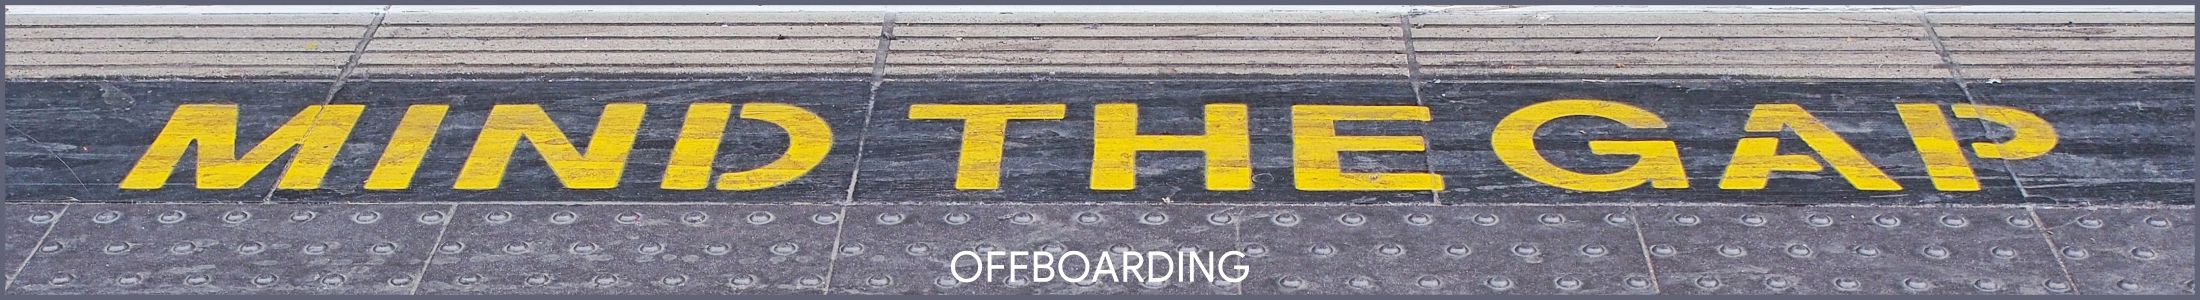 offboarding